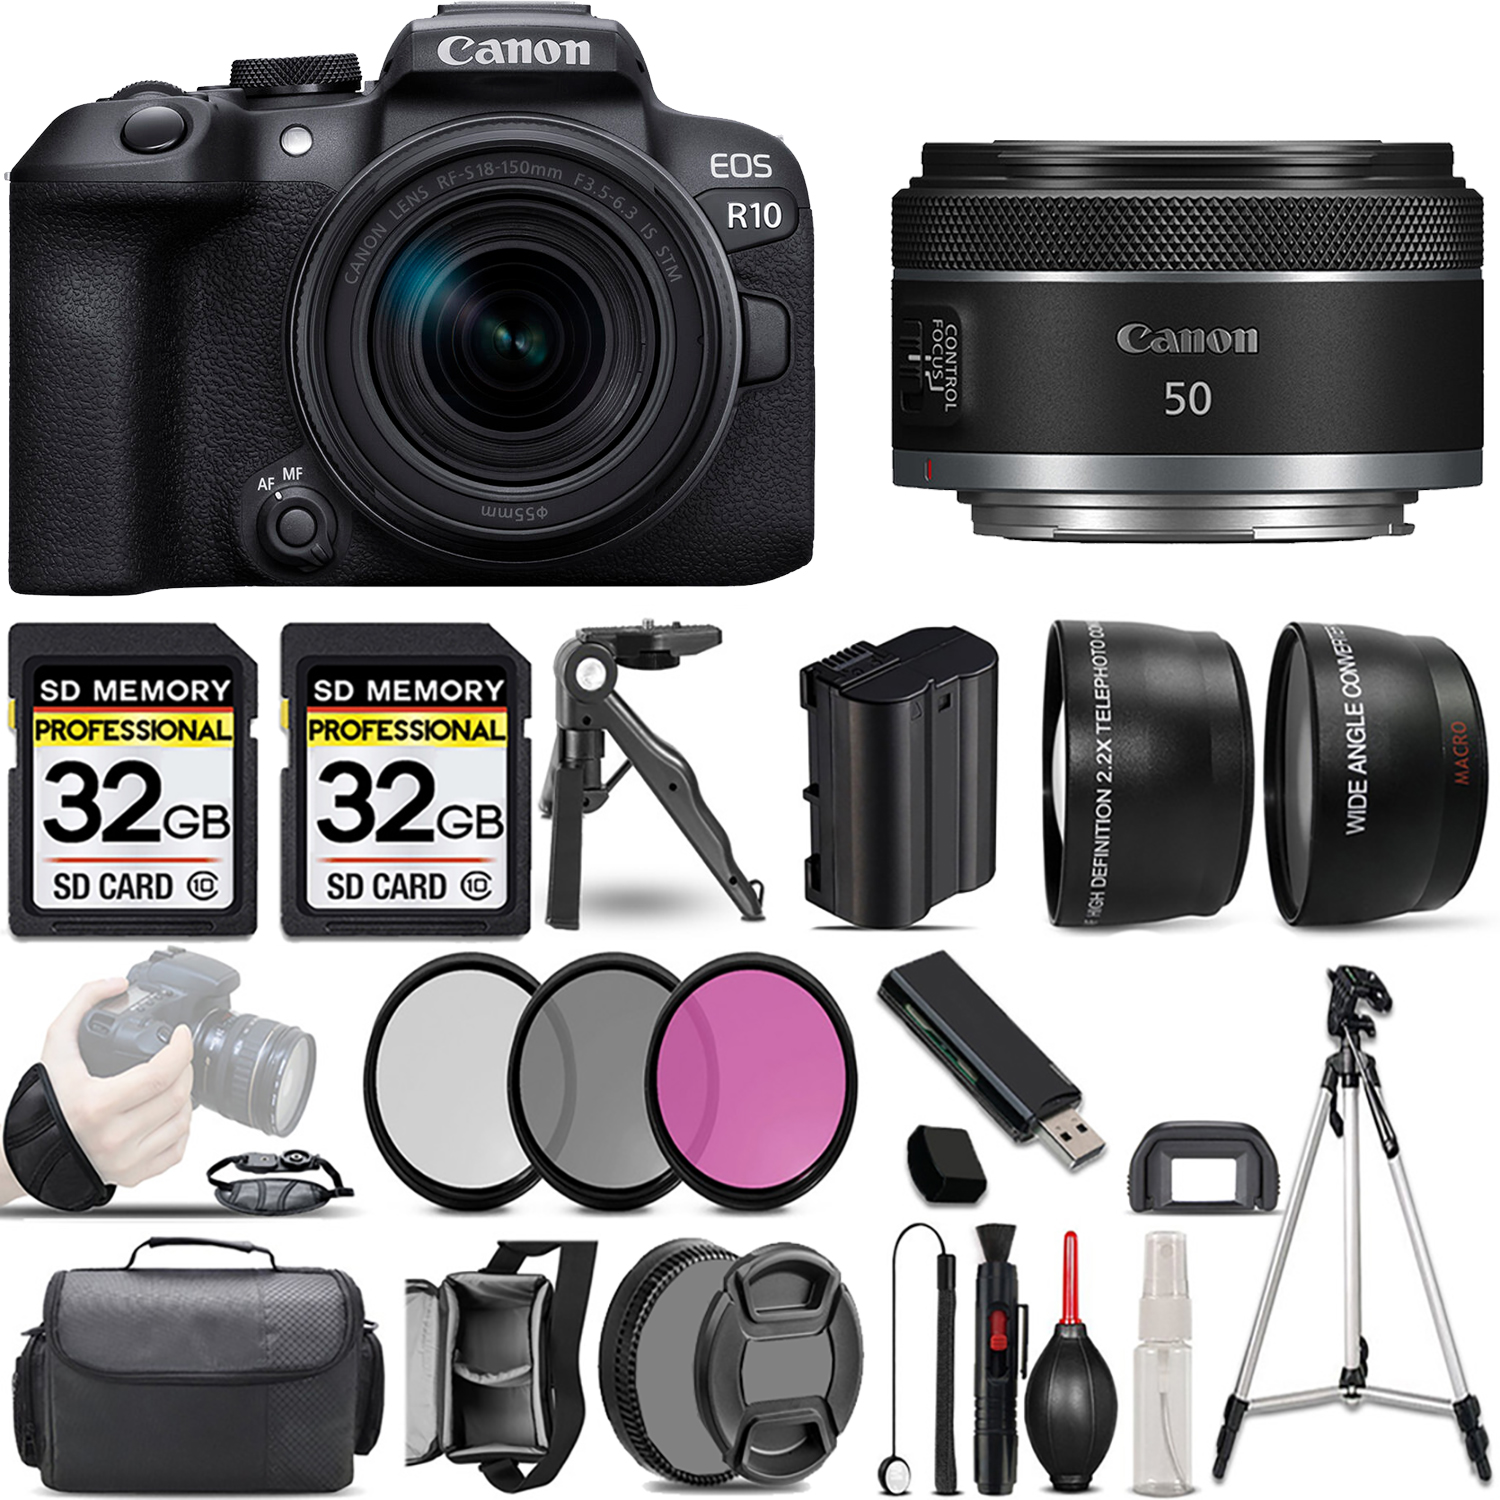 EOS R10 Camera +18-150mm Lens +50mm f/1.8 STM Lens +3 PC Filter +64GB *FREE SHIPPING*